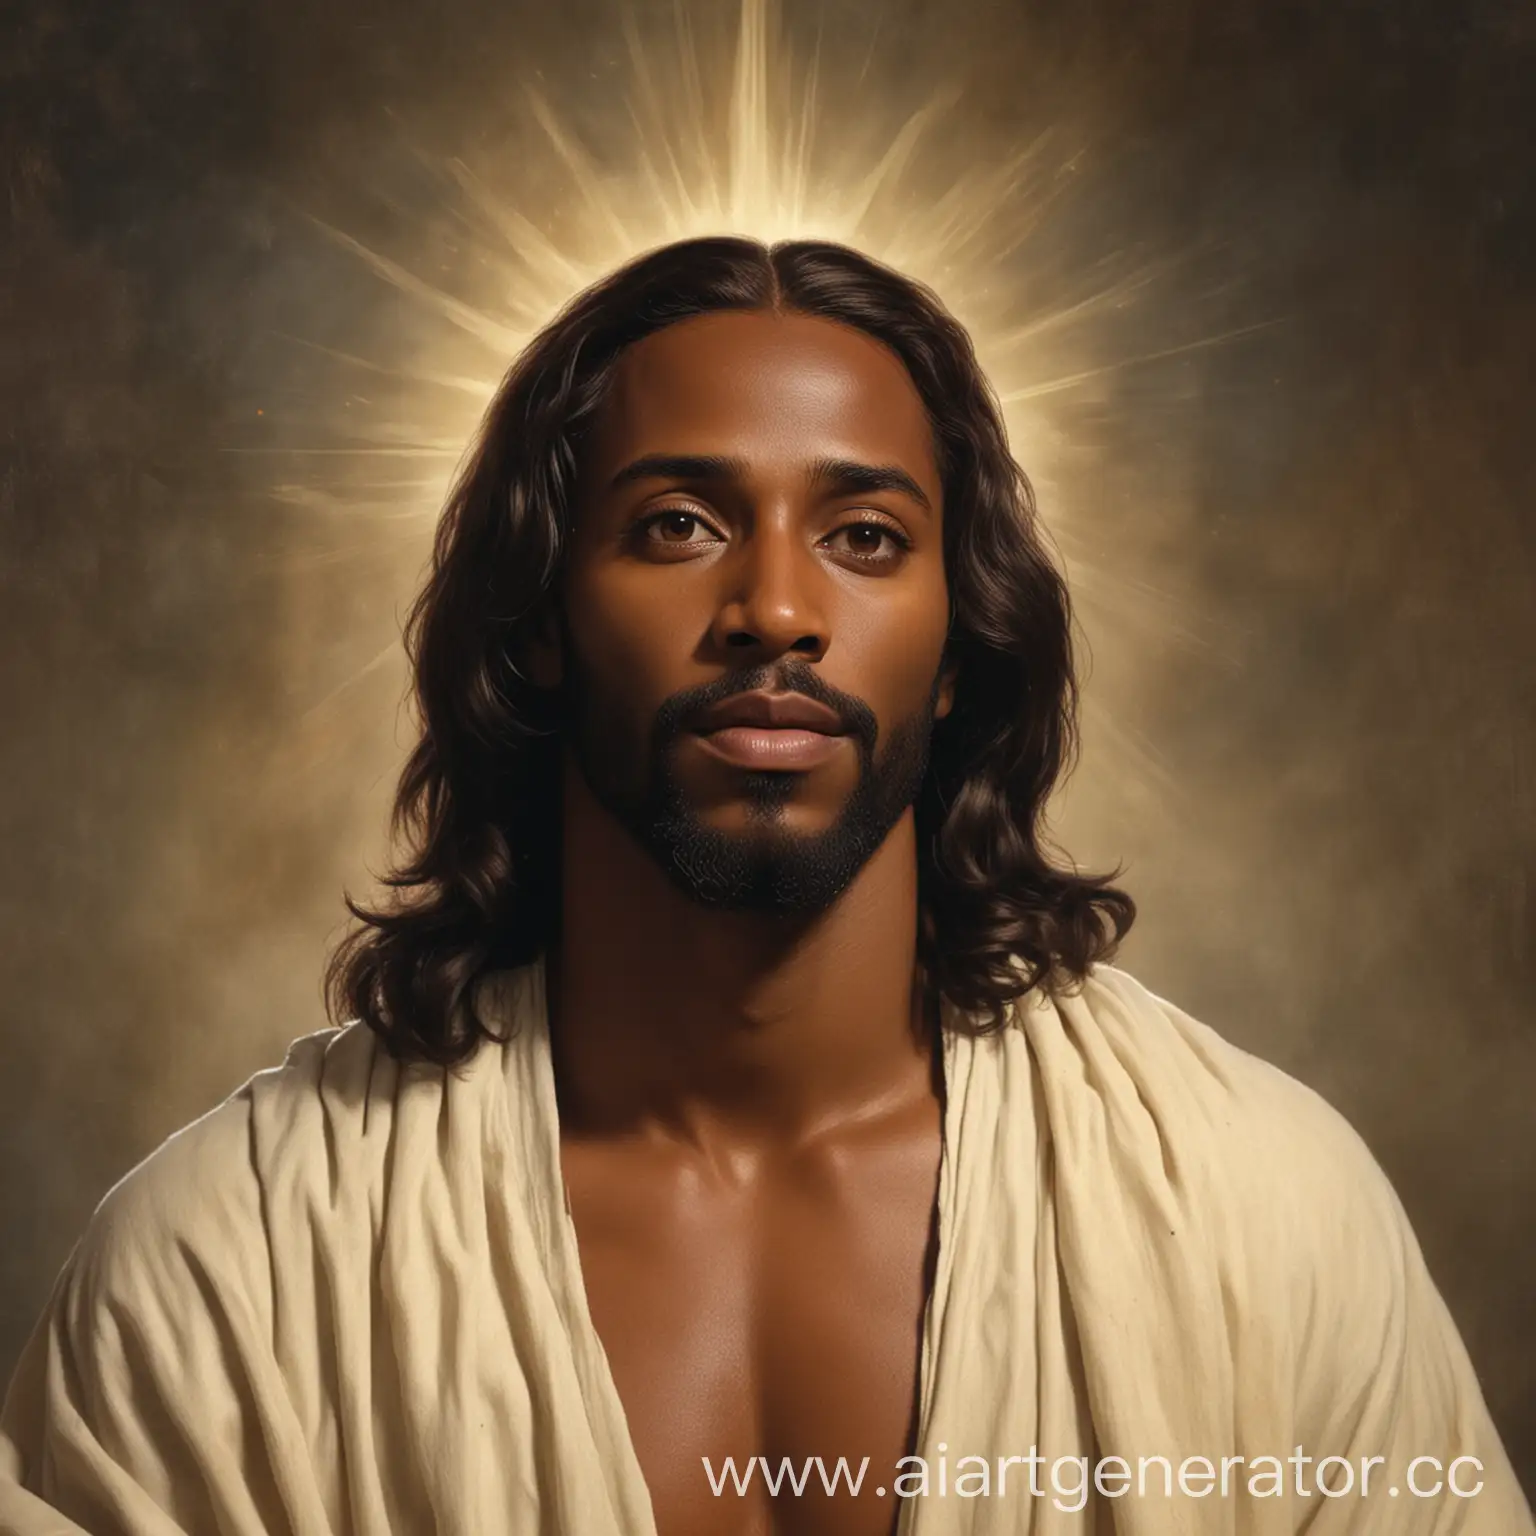 A-Reverent-Depiction-of-Black-Homosexual-Jesus-Christ